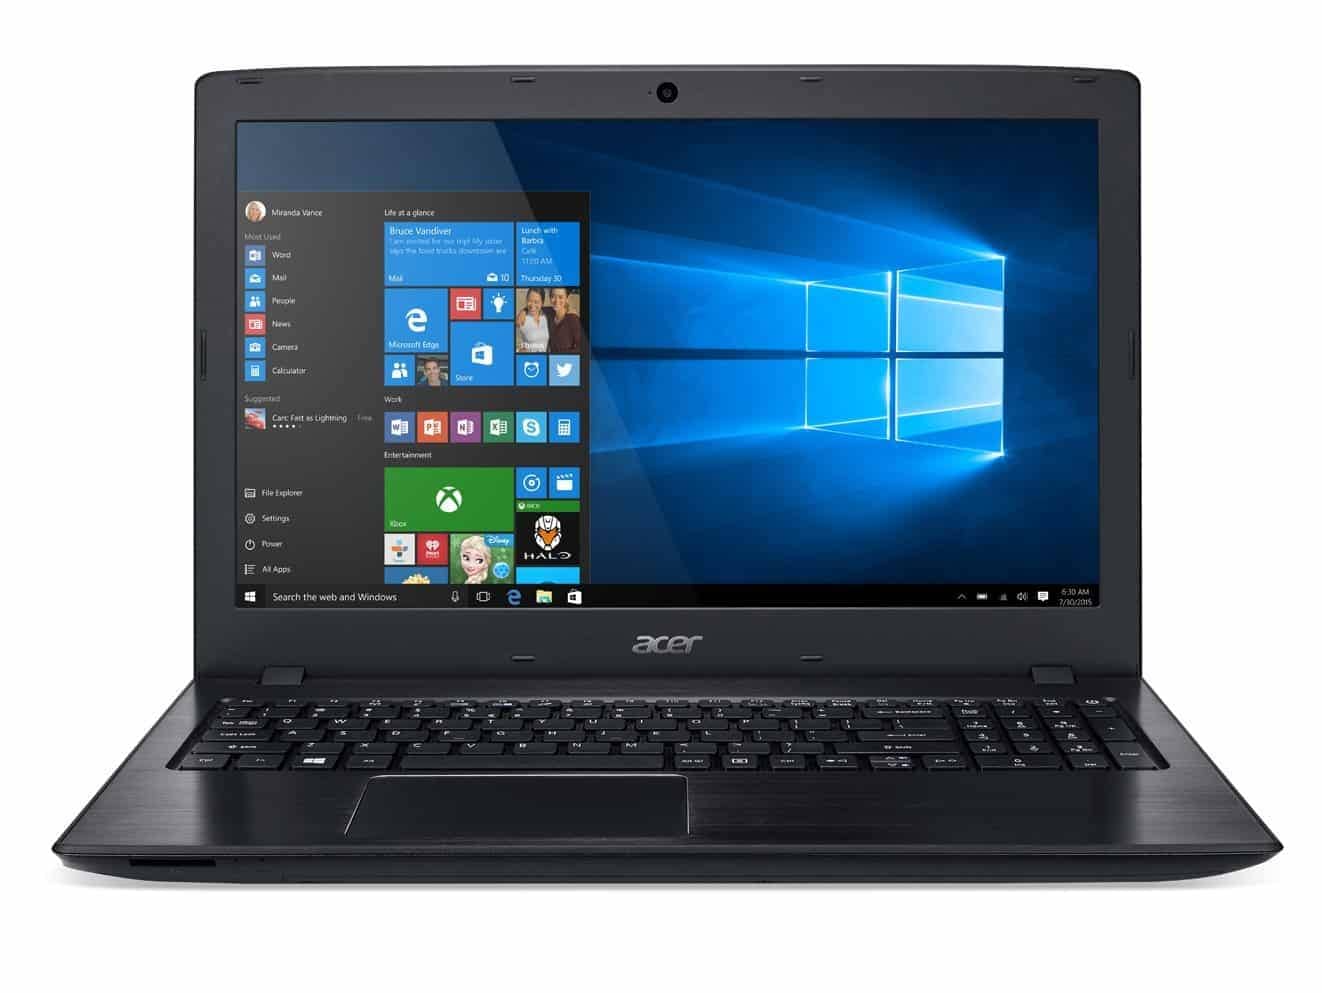 The $400 Acer Aspire E15 Laptop